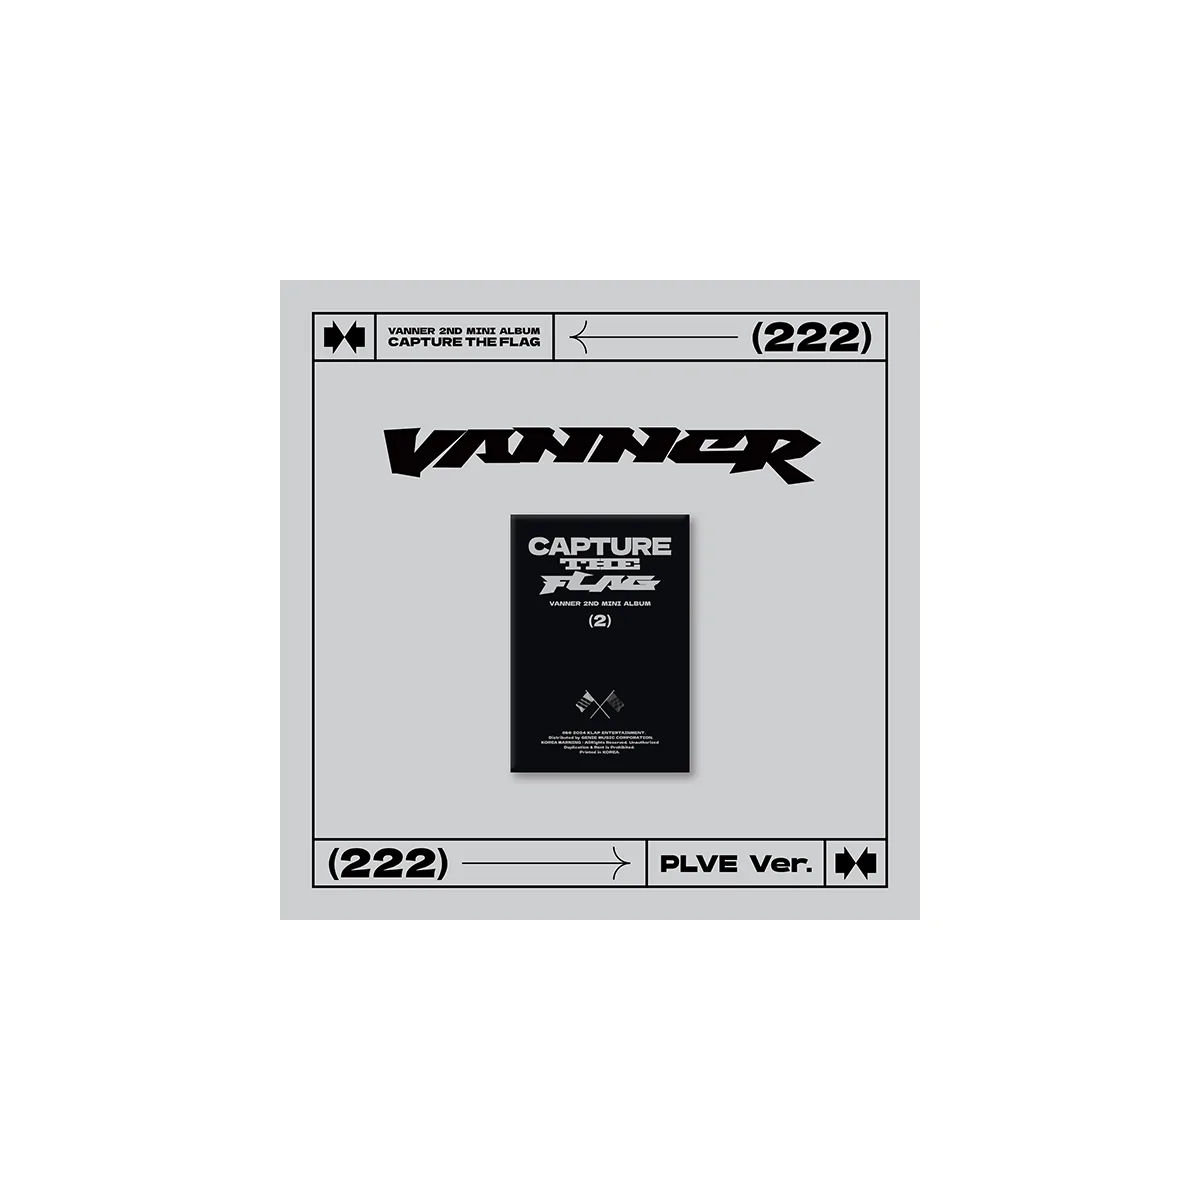 VANNER - CAPTURE THE FLAG (PLVE Version) (2nd Mini Album) 